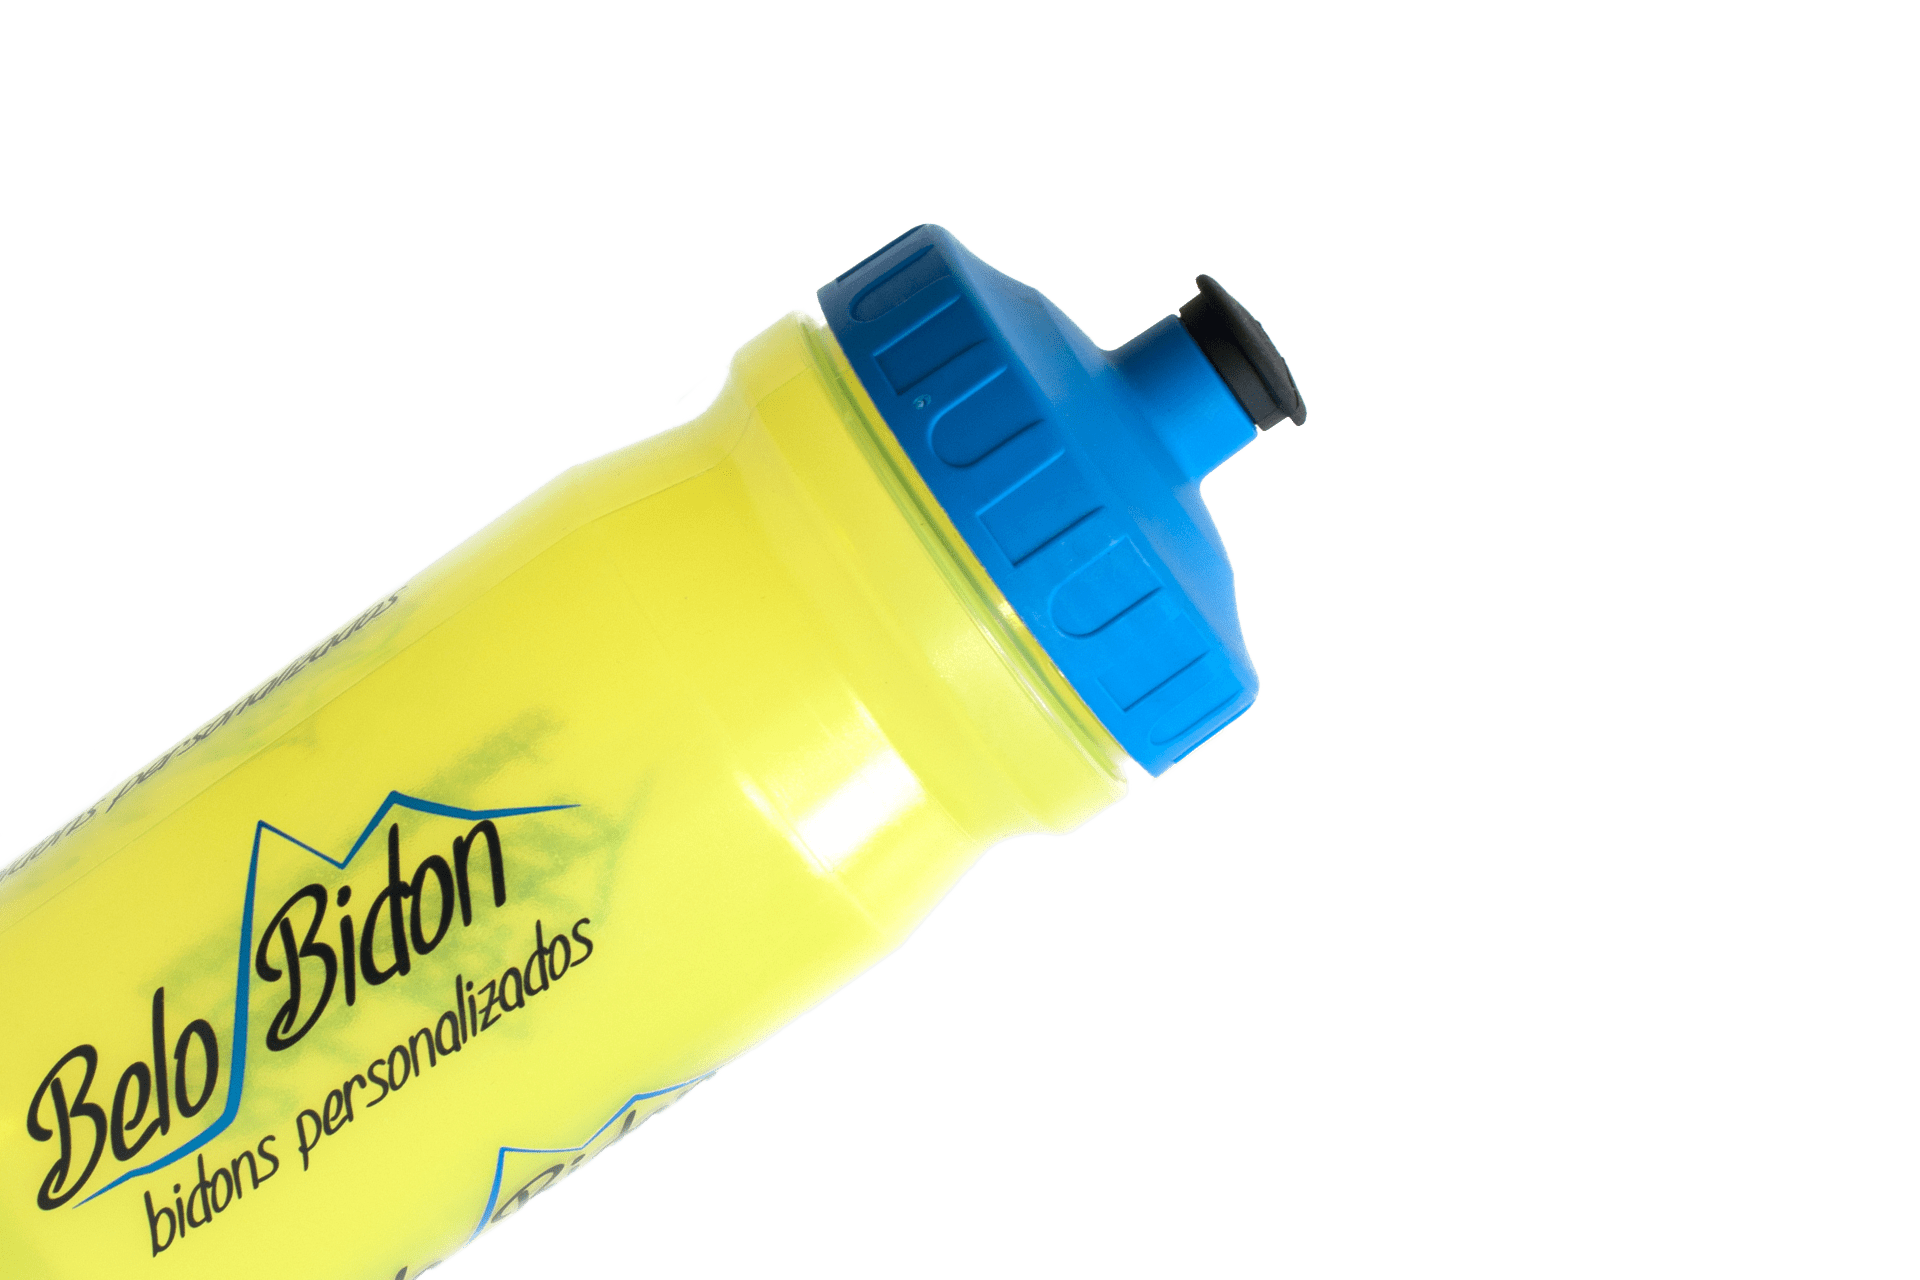 Sport bottle PNG